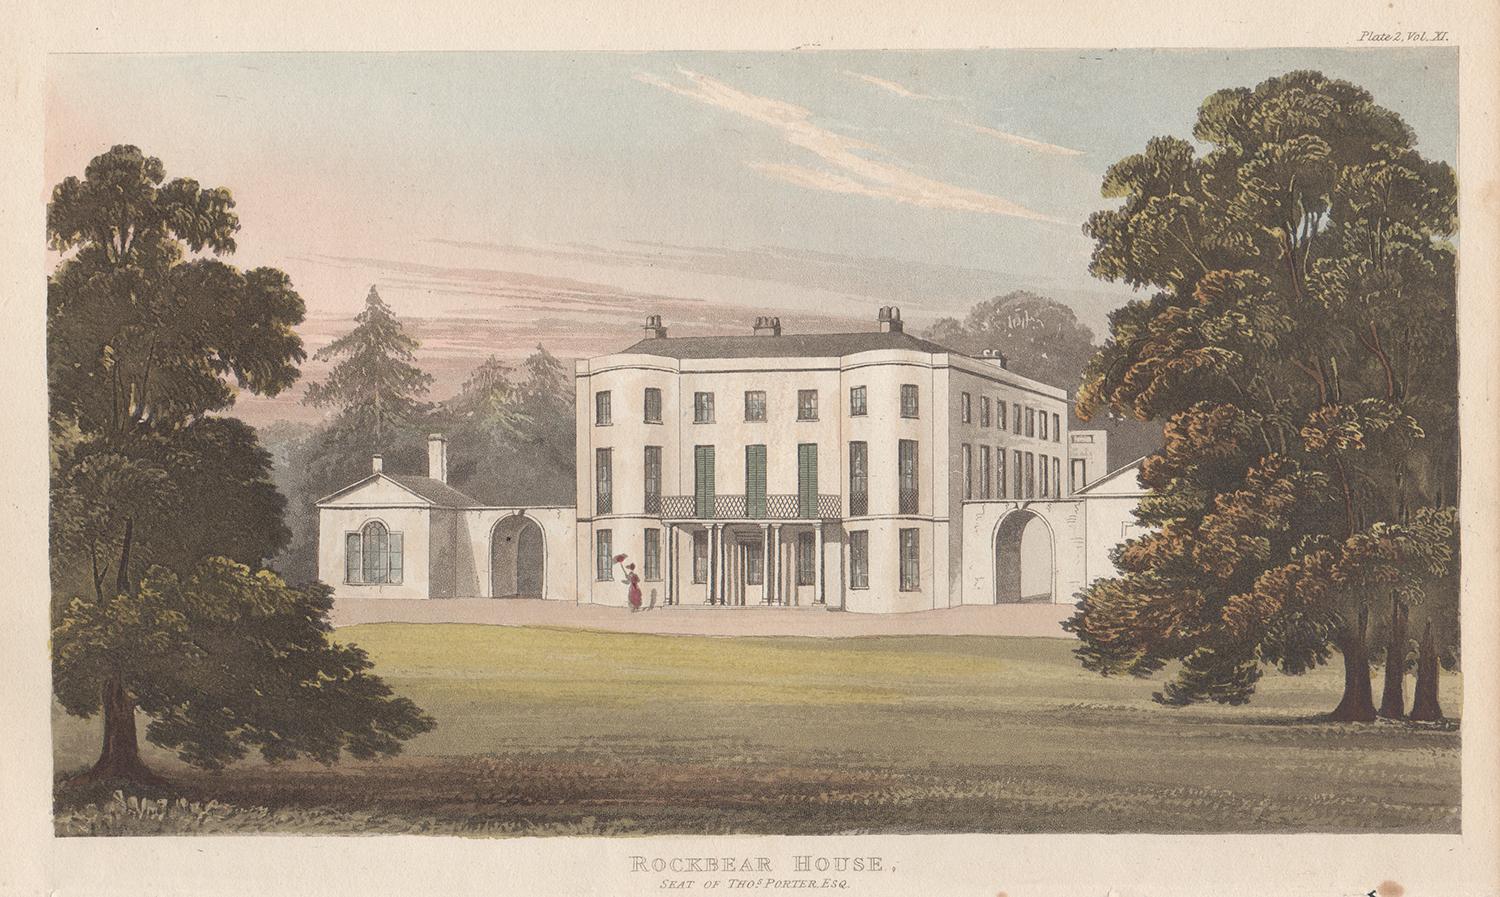 Rockbear House, Devon, English Regency country house colour aquatint, 1818